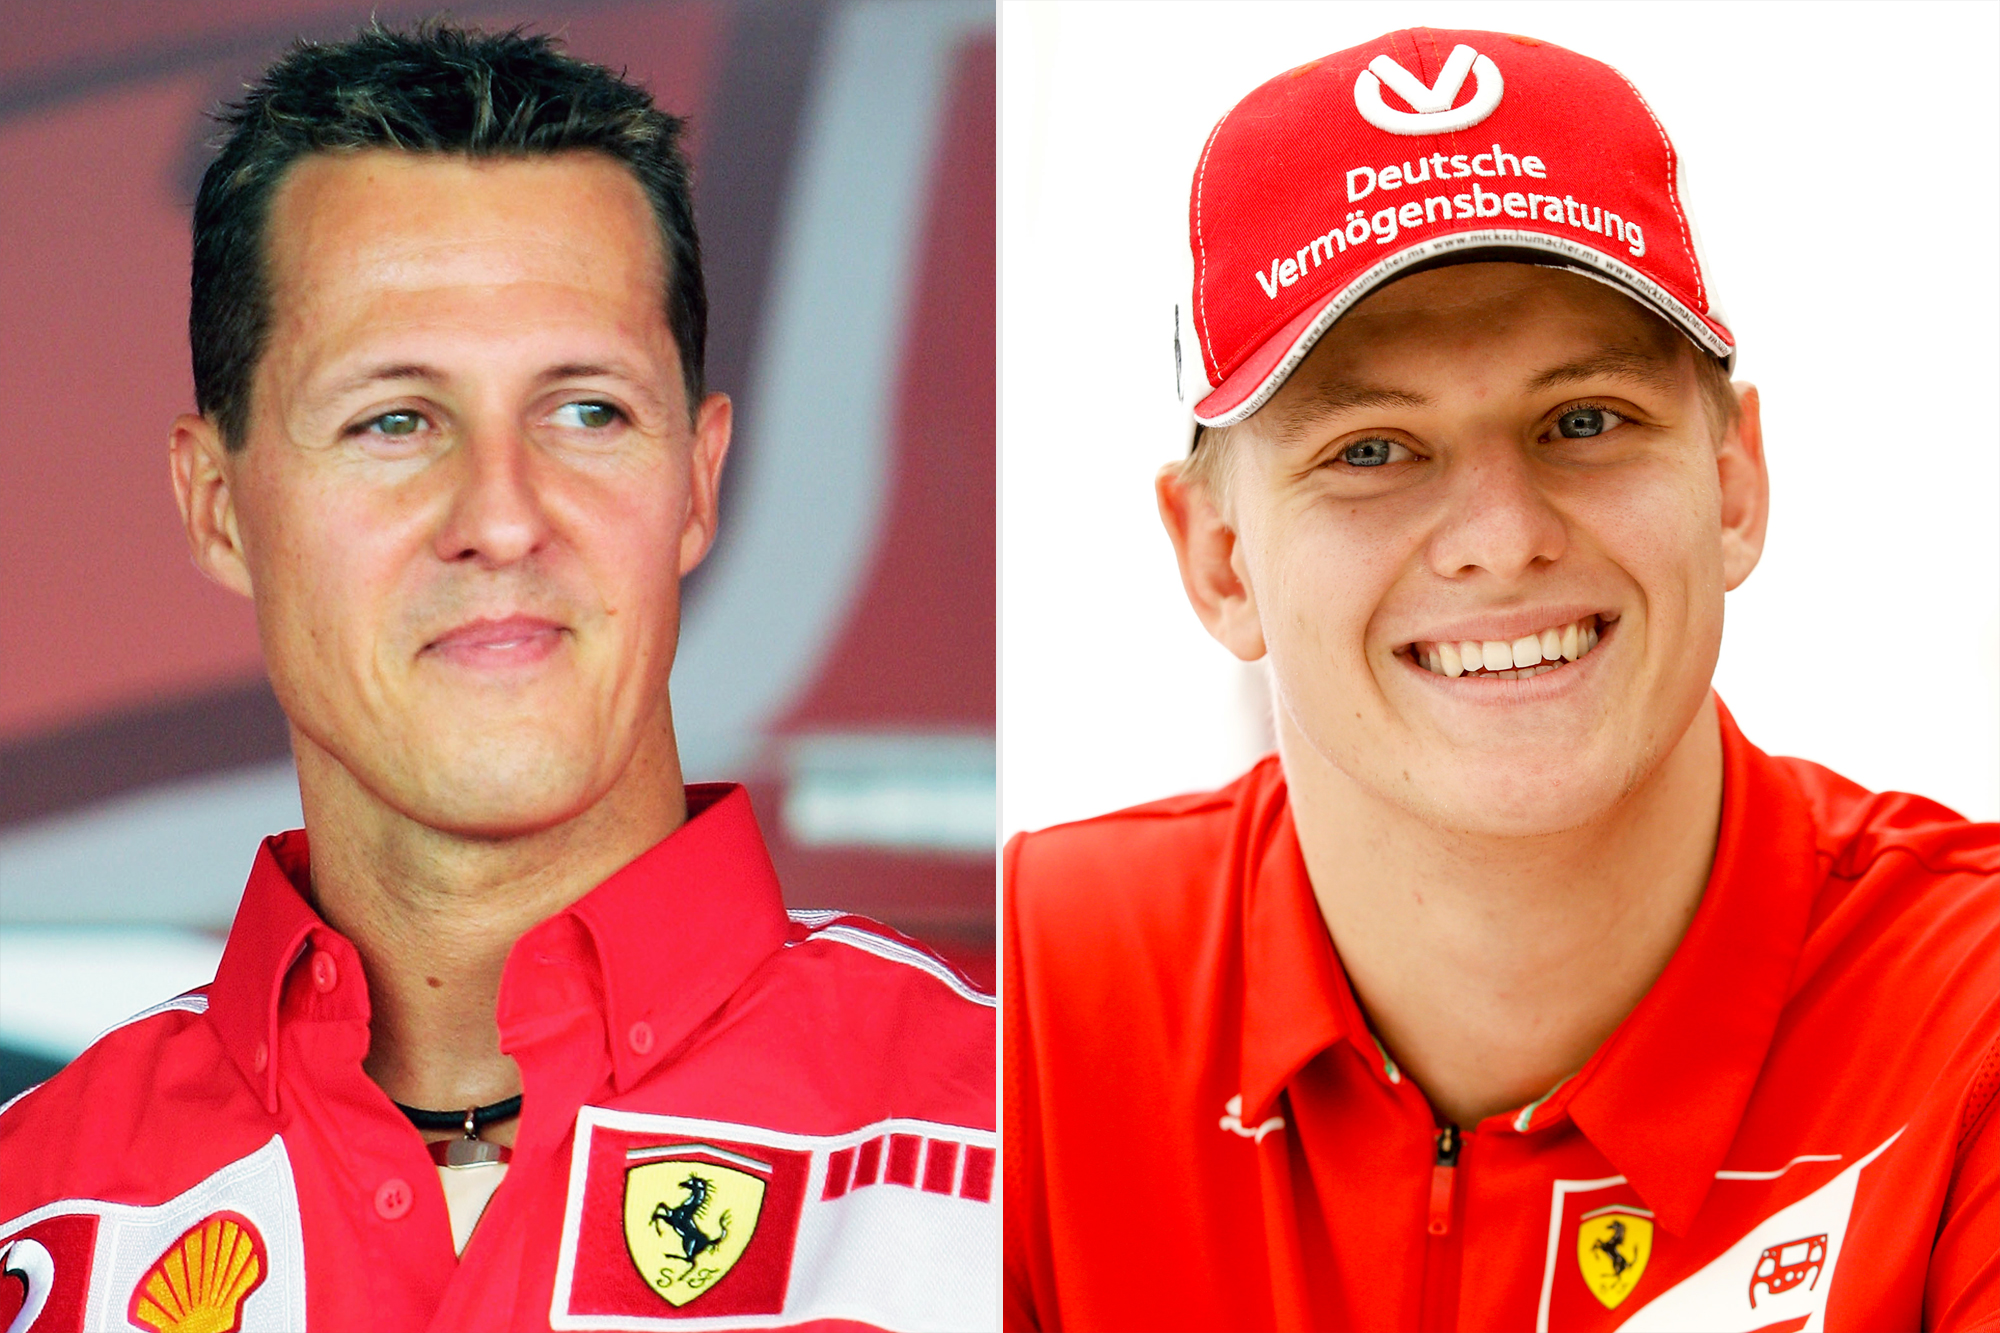 F1 legend Michael Schumacher Rare Health Condition Close Friend Confesses!